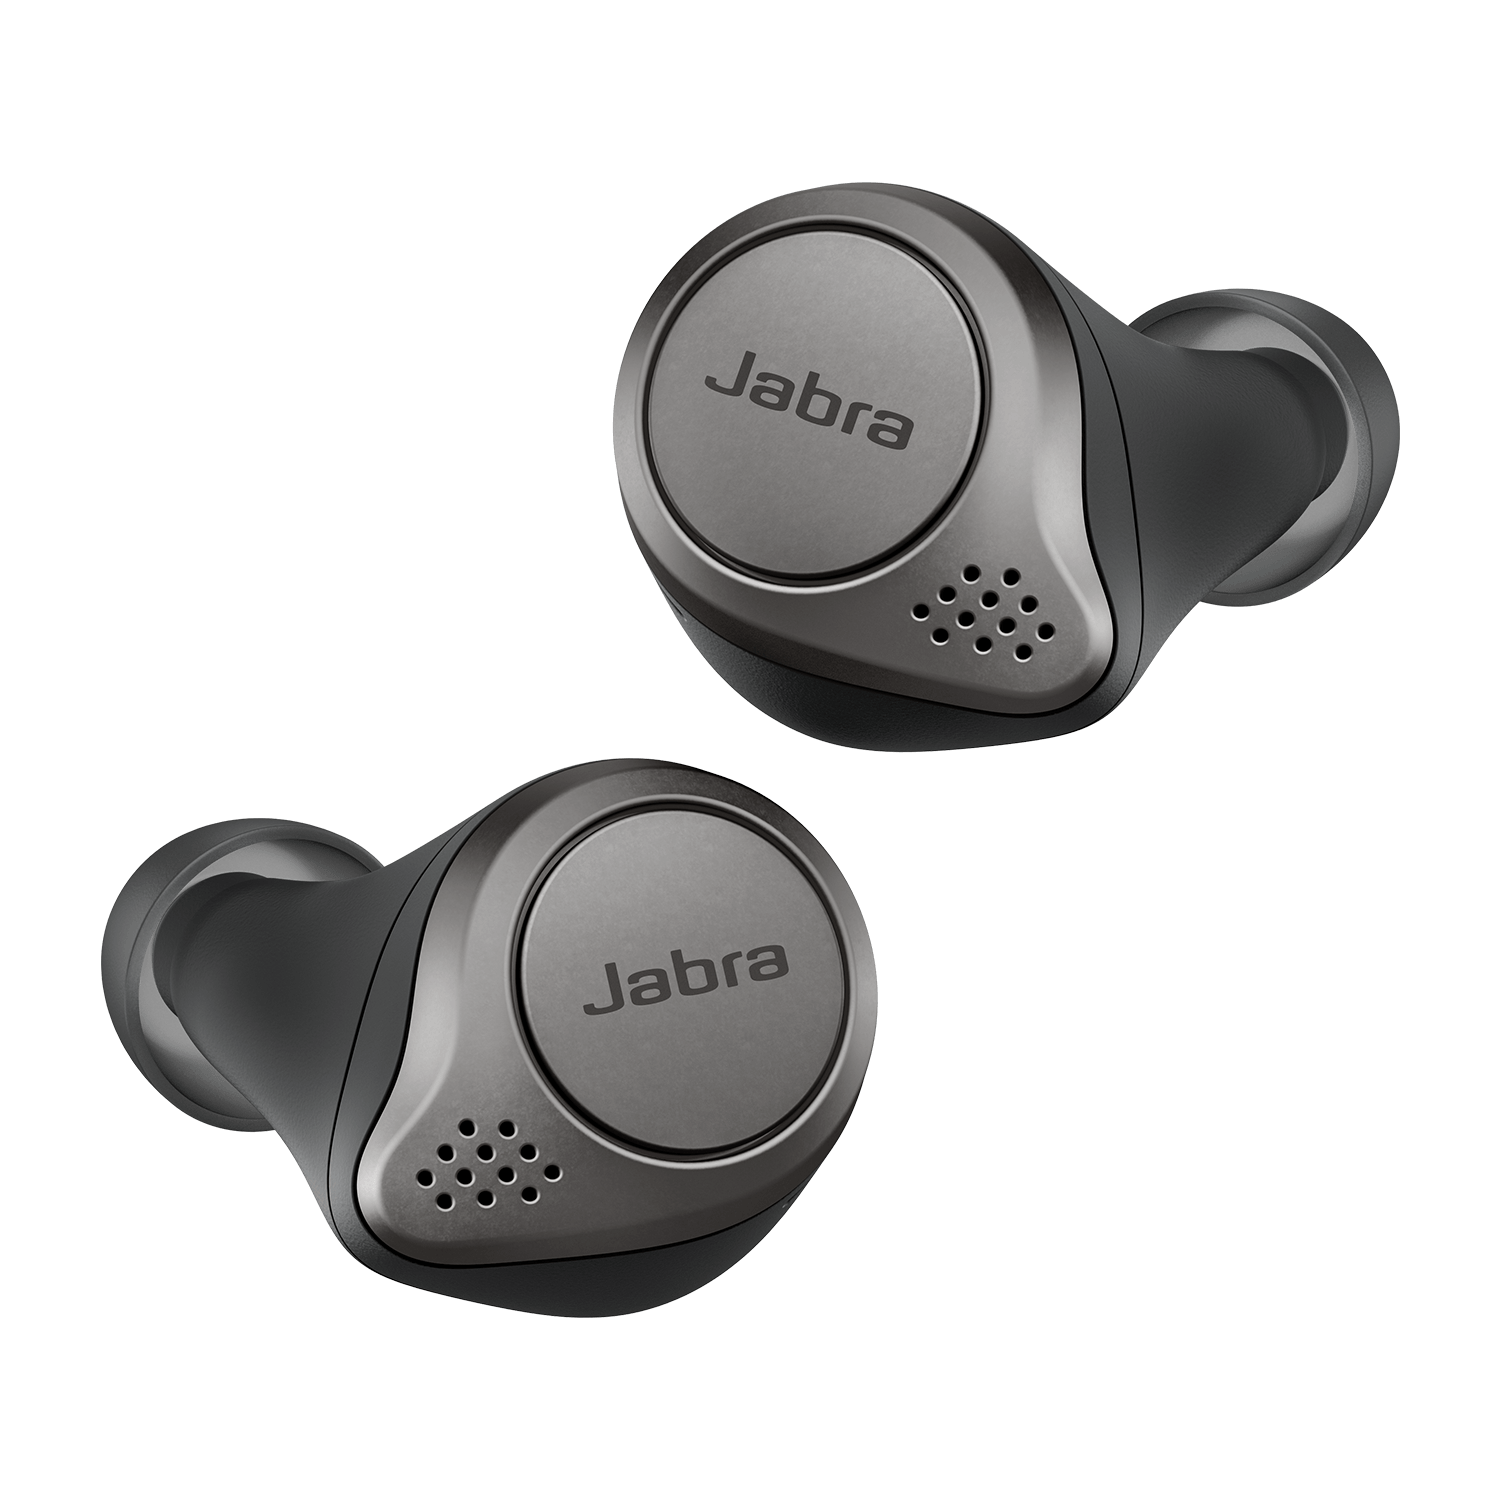 Jabra For Jabra Elite 75t/65t/Active/Sport Evolve Earphones Ear Tips Replacement Set 